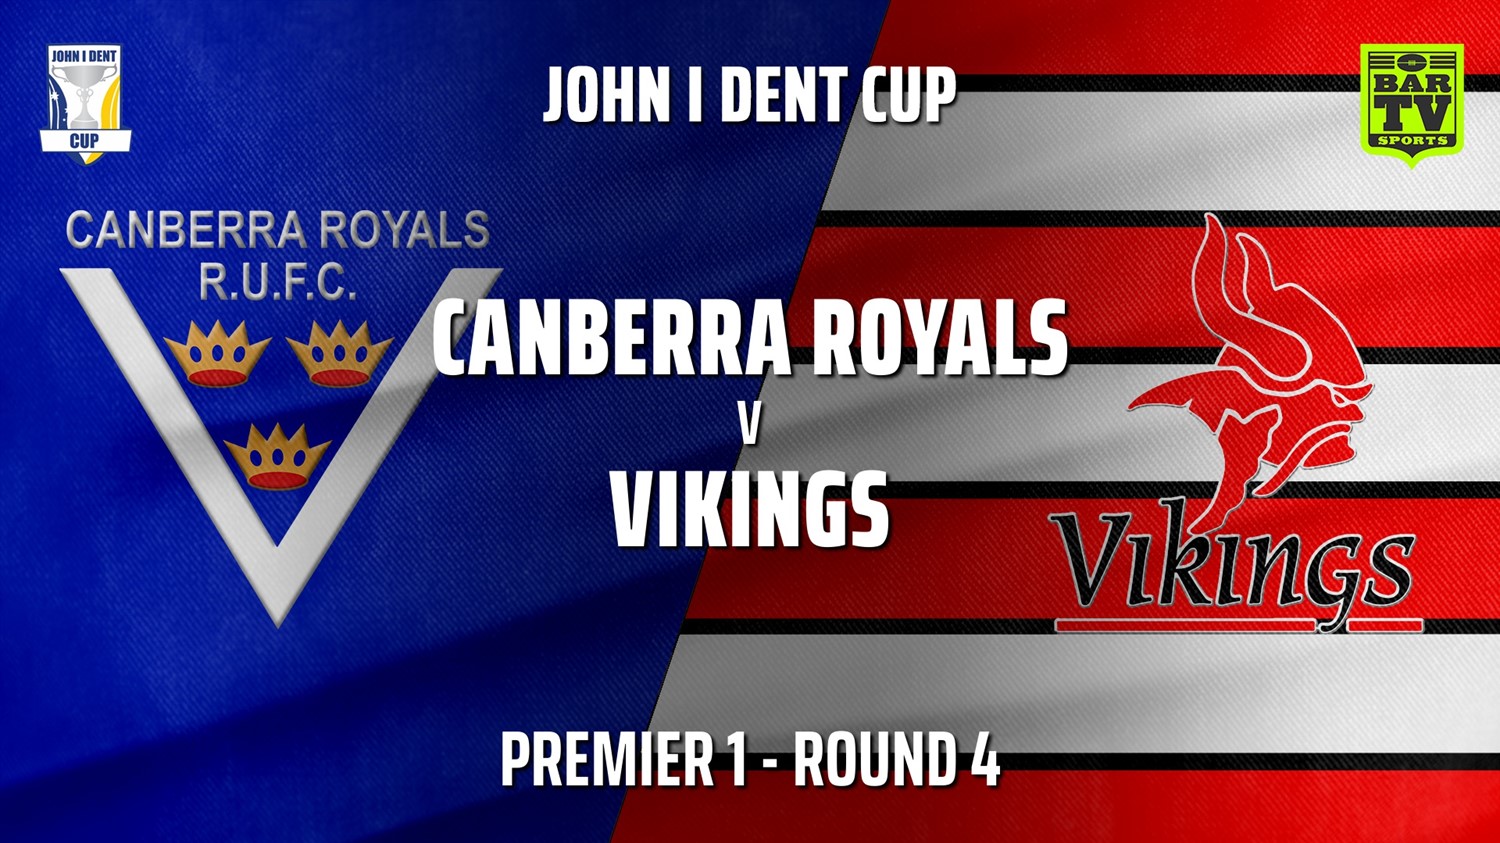 210508-John I Dent Round 4 - Premier 1 - Canberra Royals v Tuggeranong Vikings Minigame Slate Image